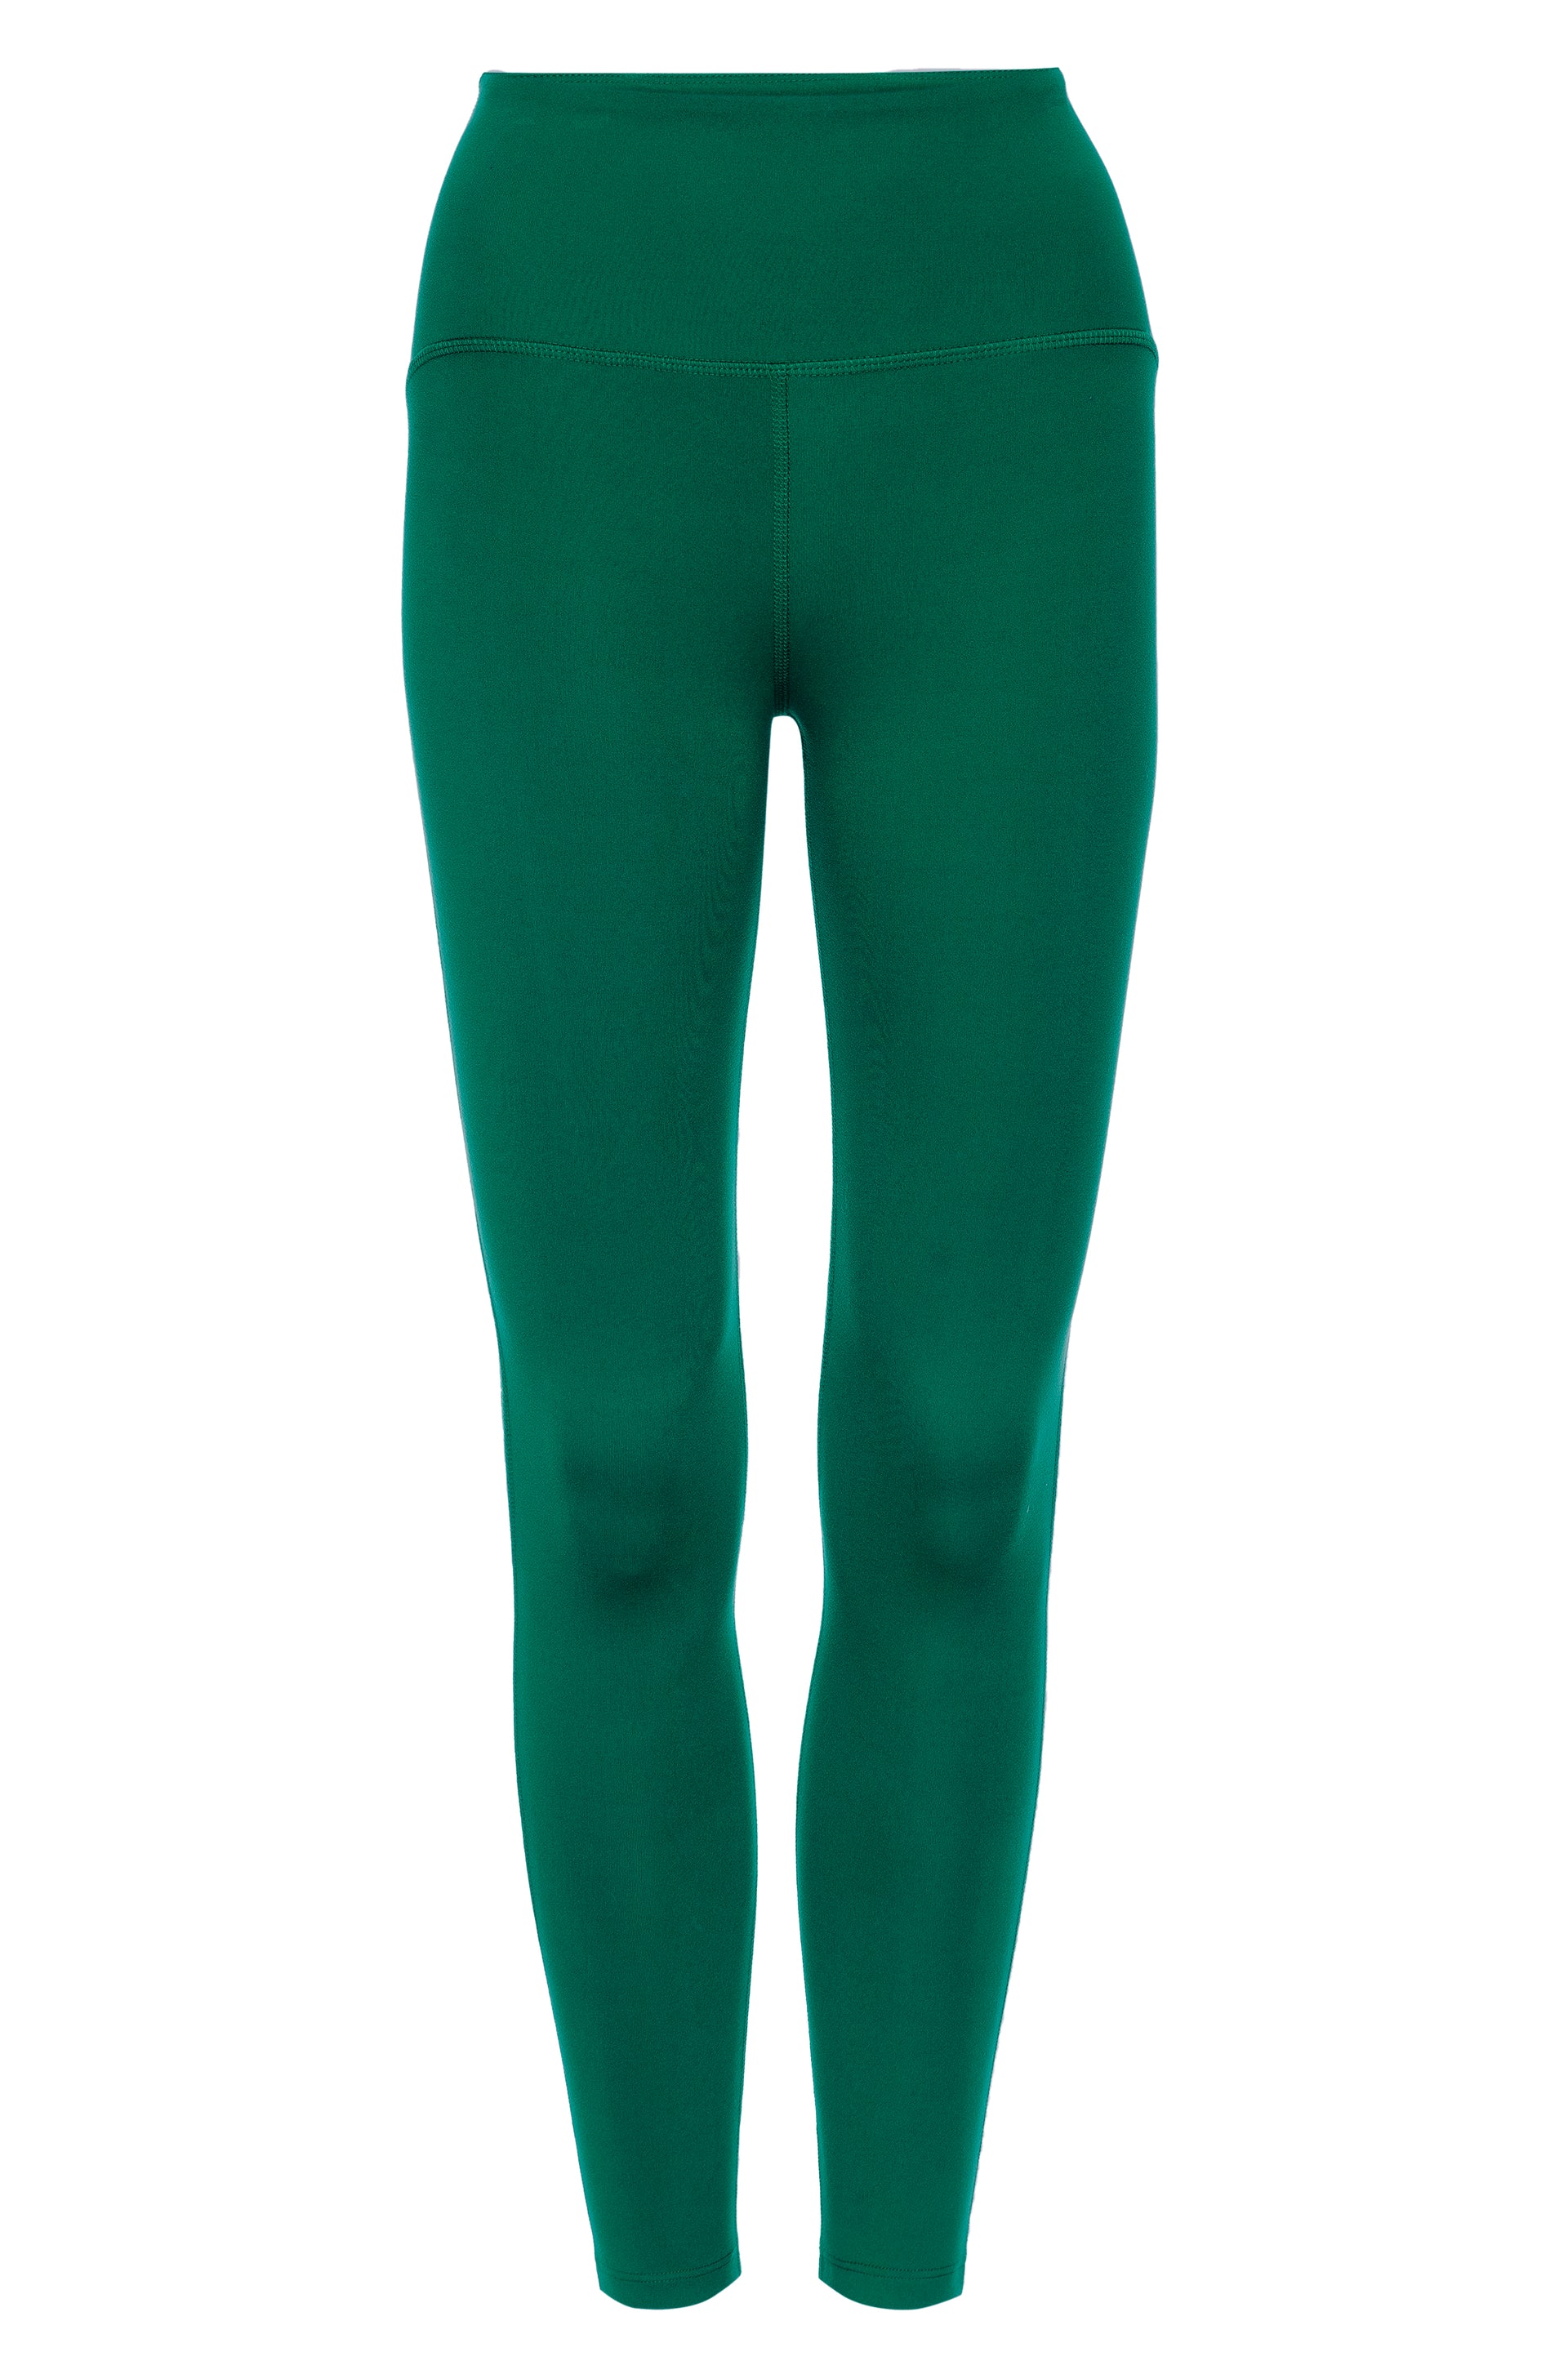 green 4" waistband midi leggings.